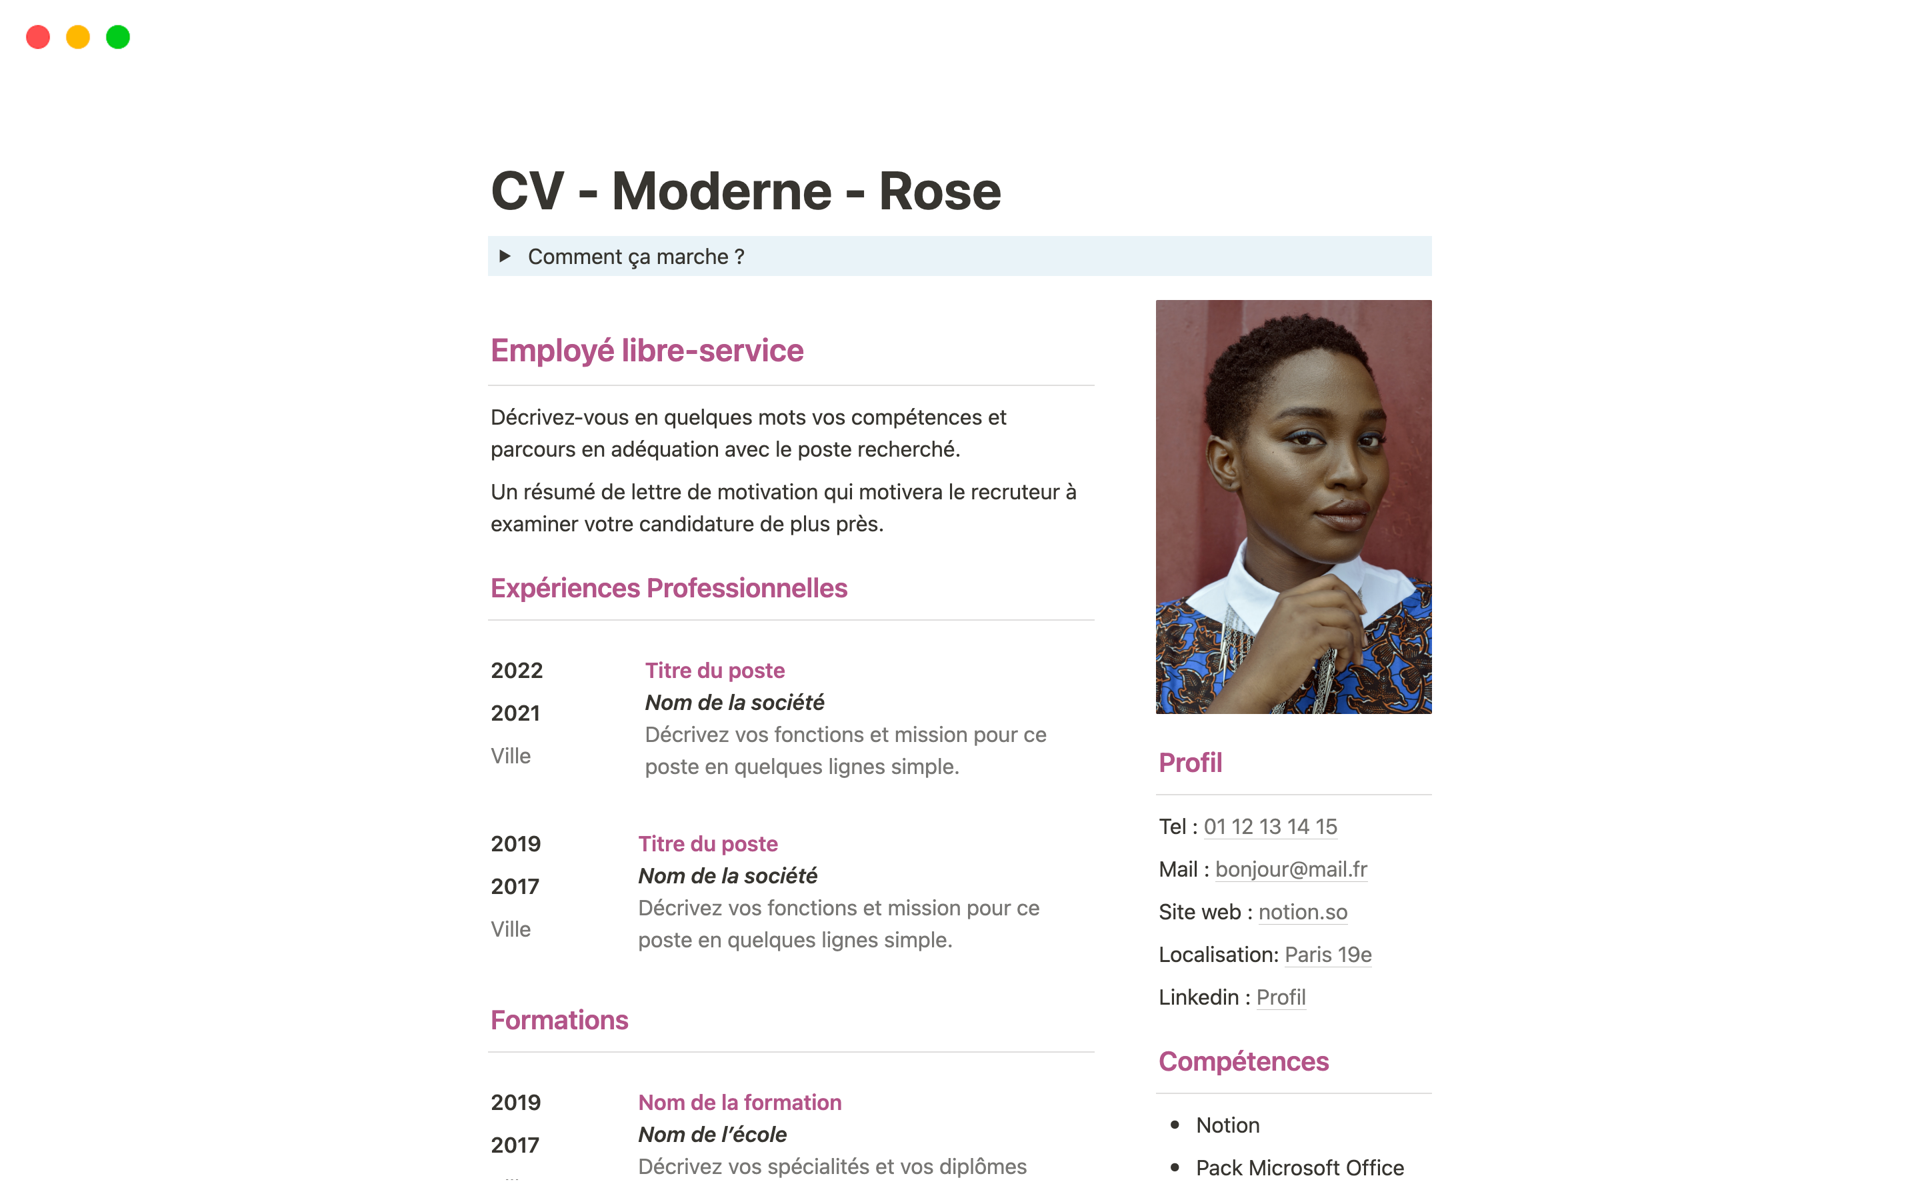 Vista previa de una plantilla para CV - Moderne - Rose